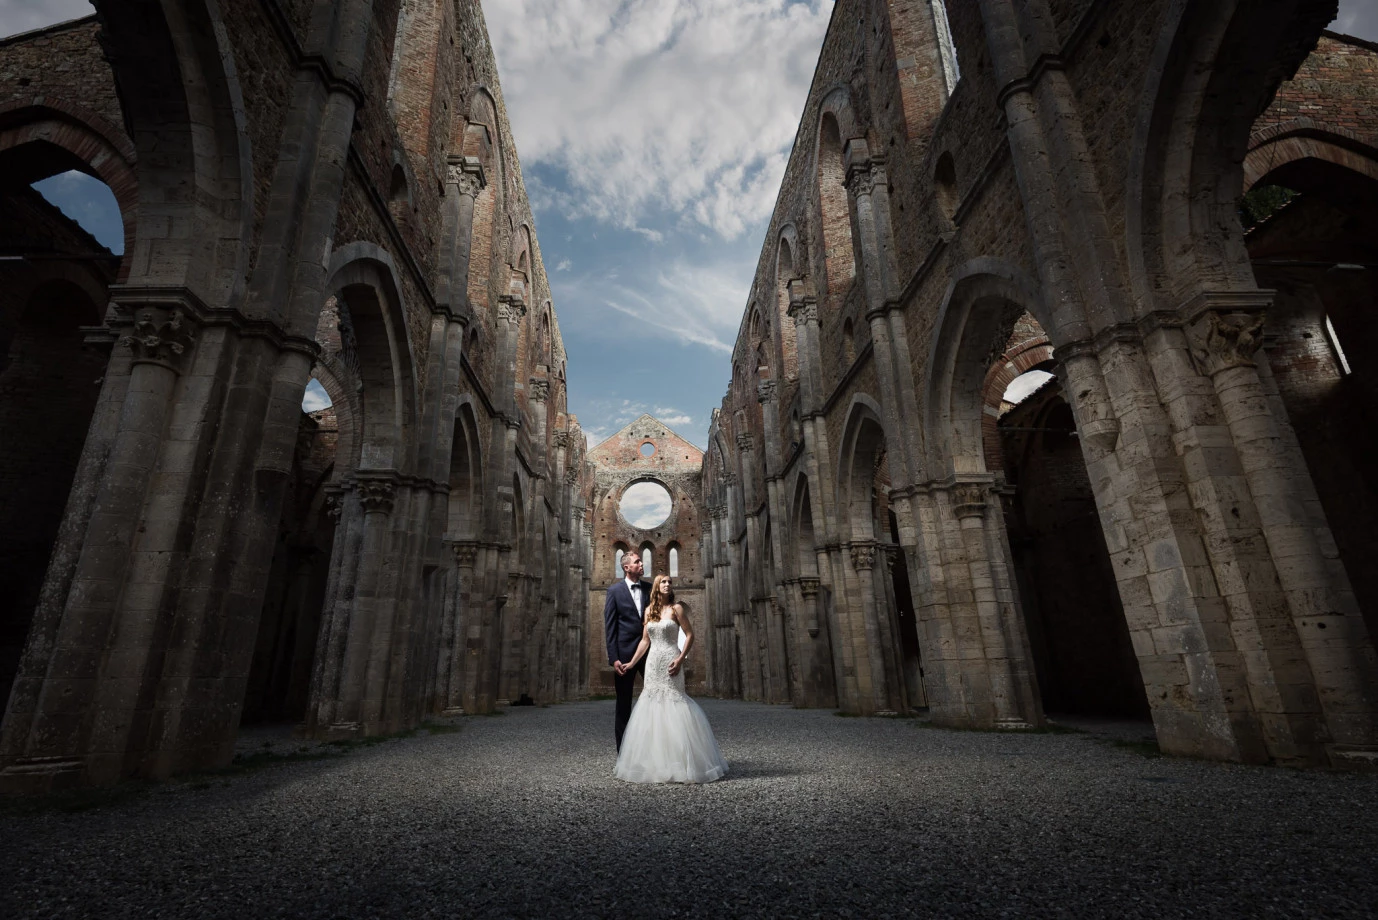 fotograf opole fotosceny portfolio zdjecia zdjecia slubne inspiracje wesele plener slubny sesja slubna